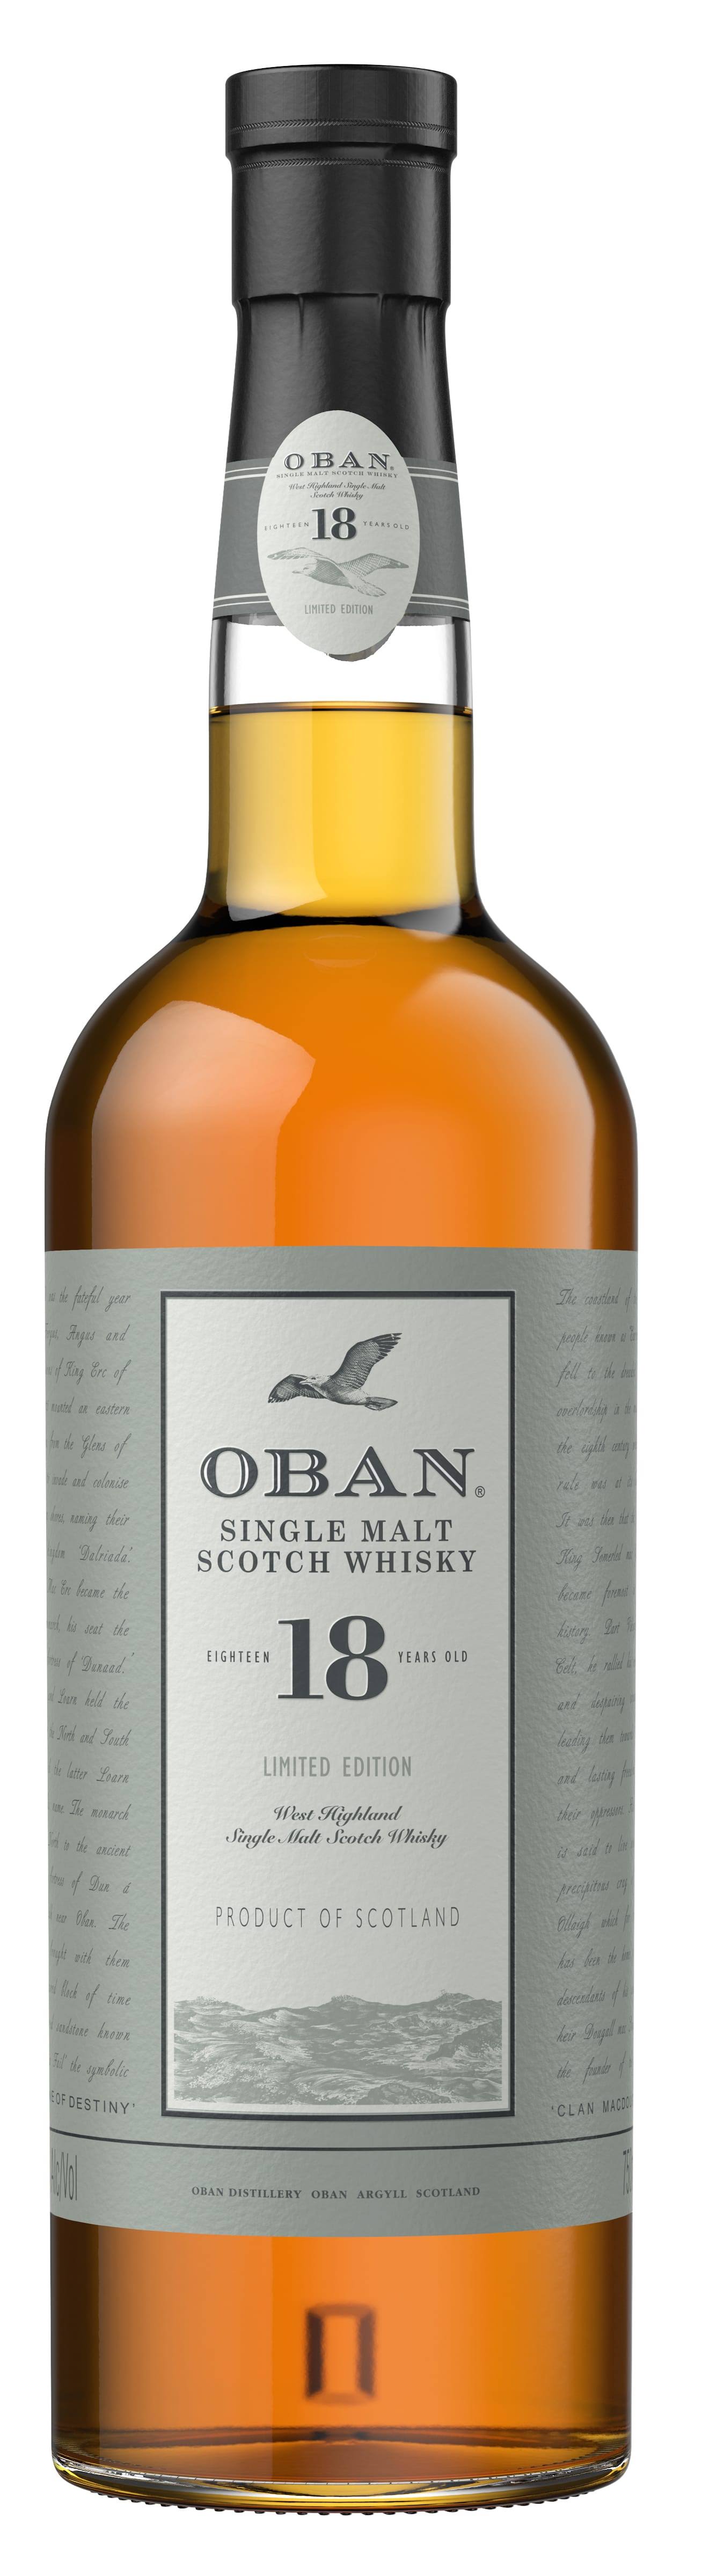 Oban 18 Year Old Limited Edition Single Malt Scotch Whisky - 750ml